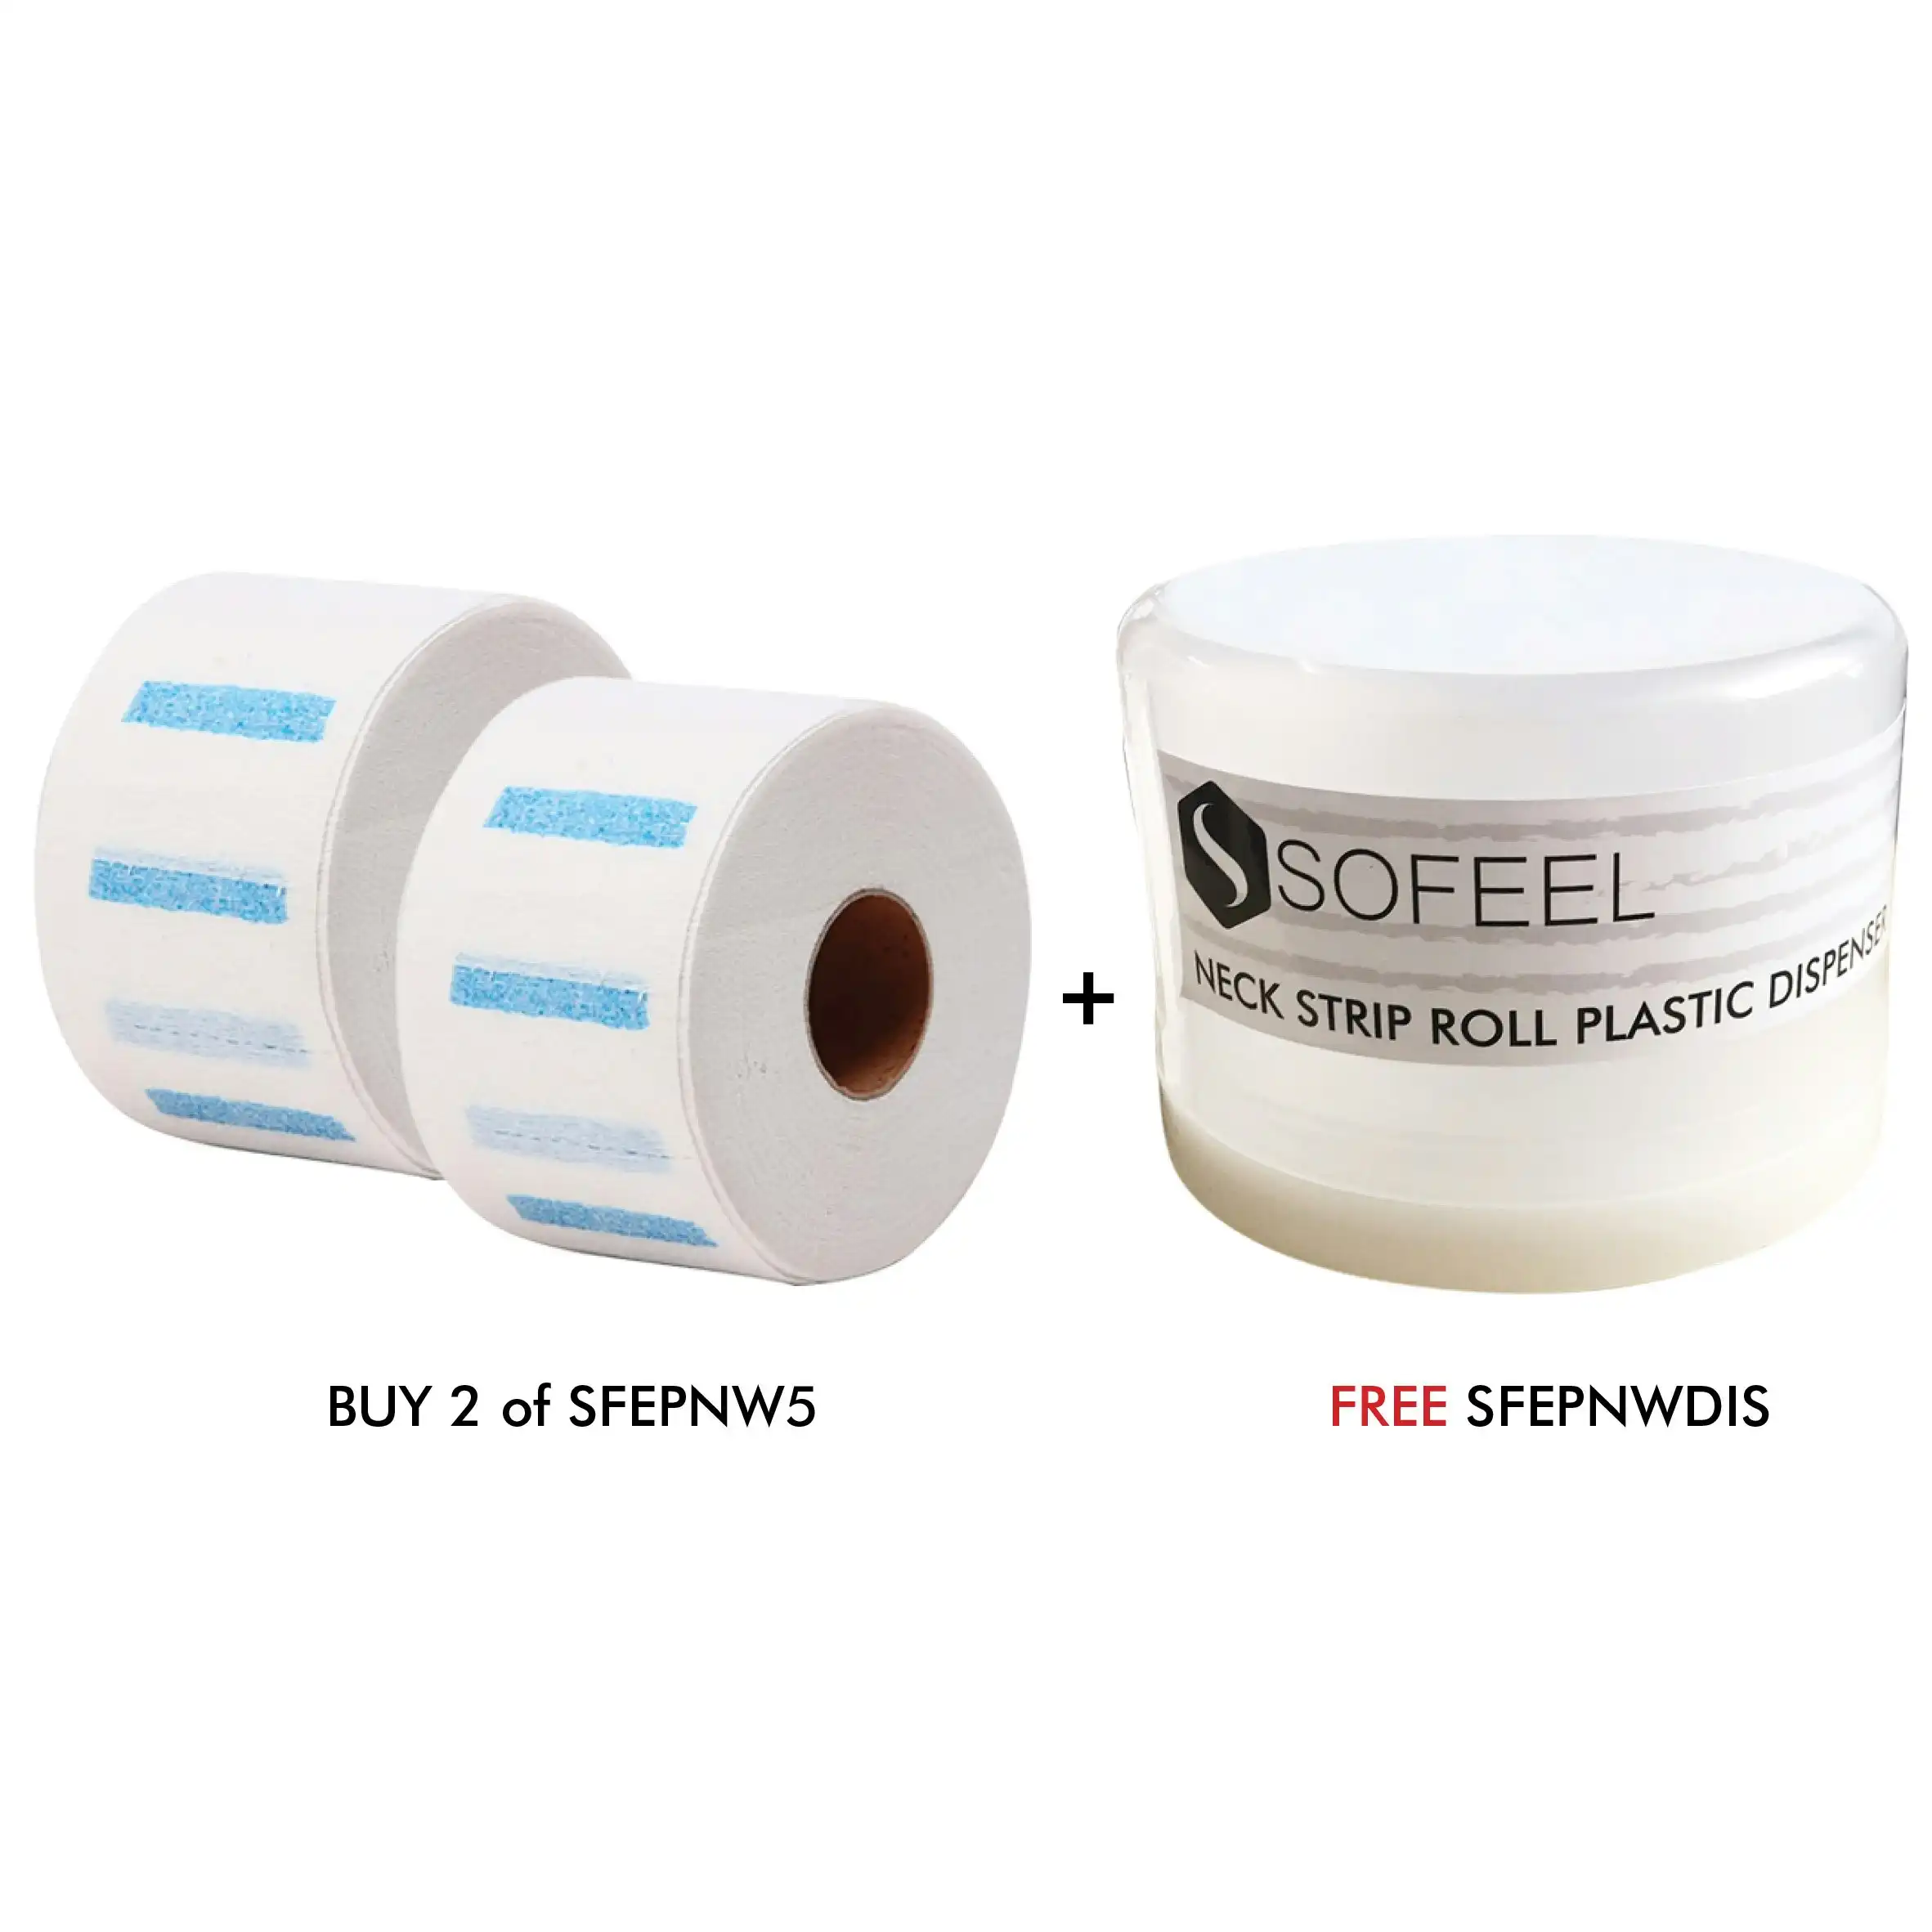 Sofeel Elastic Neck Strip Kits Buy 2 Neck Strips (SFEPNW5) and Get 1 Neck Strip Dispenser (SFEPNWDIS) FREE